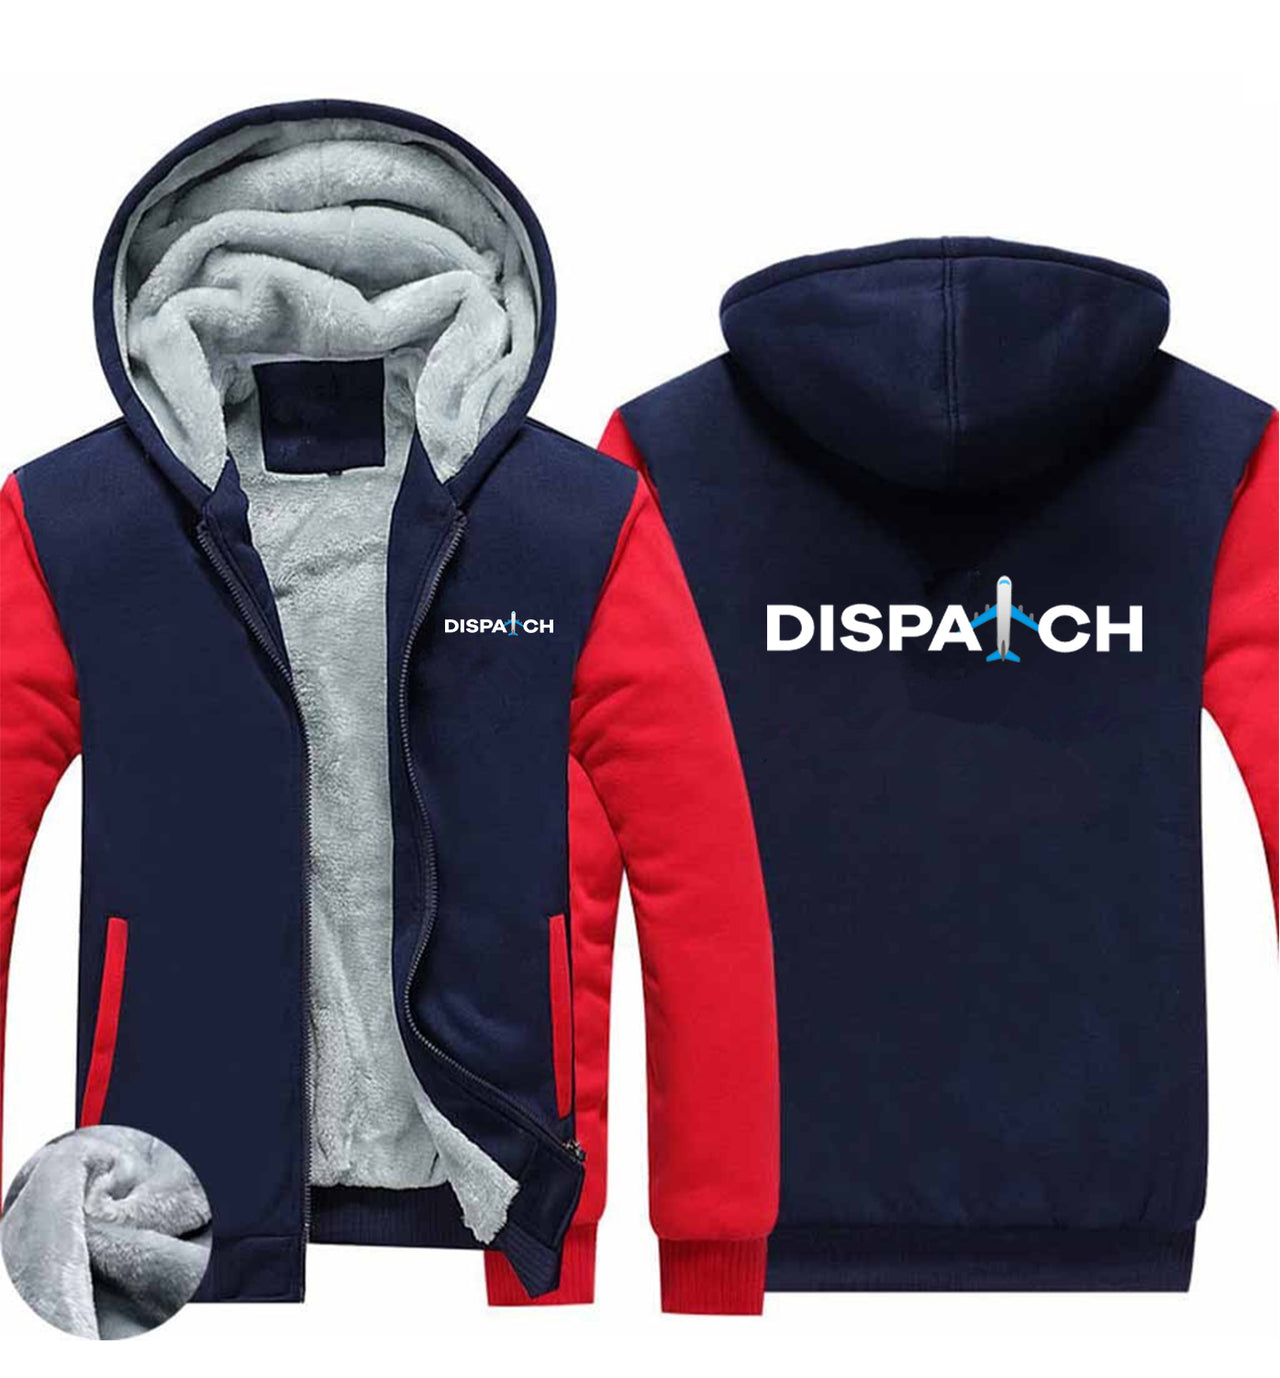 Dispatch Designed Zipped Sweatshirts